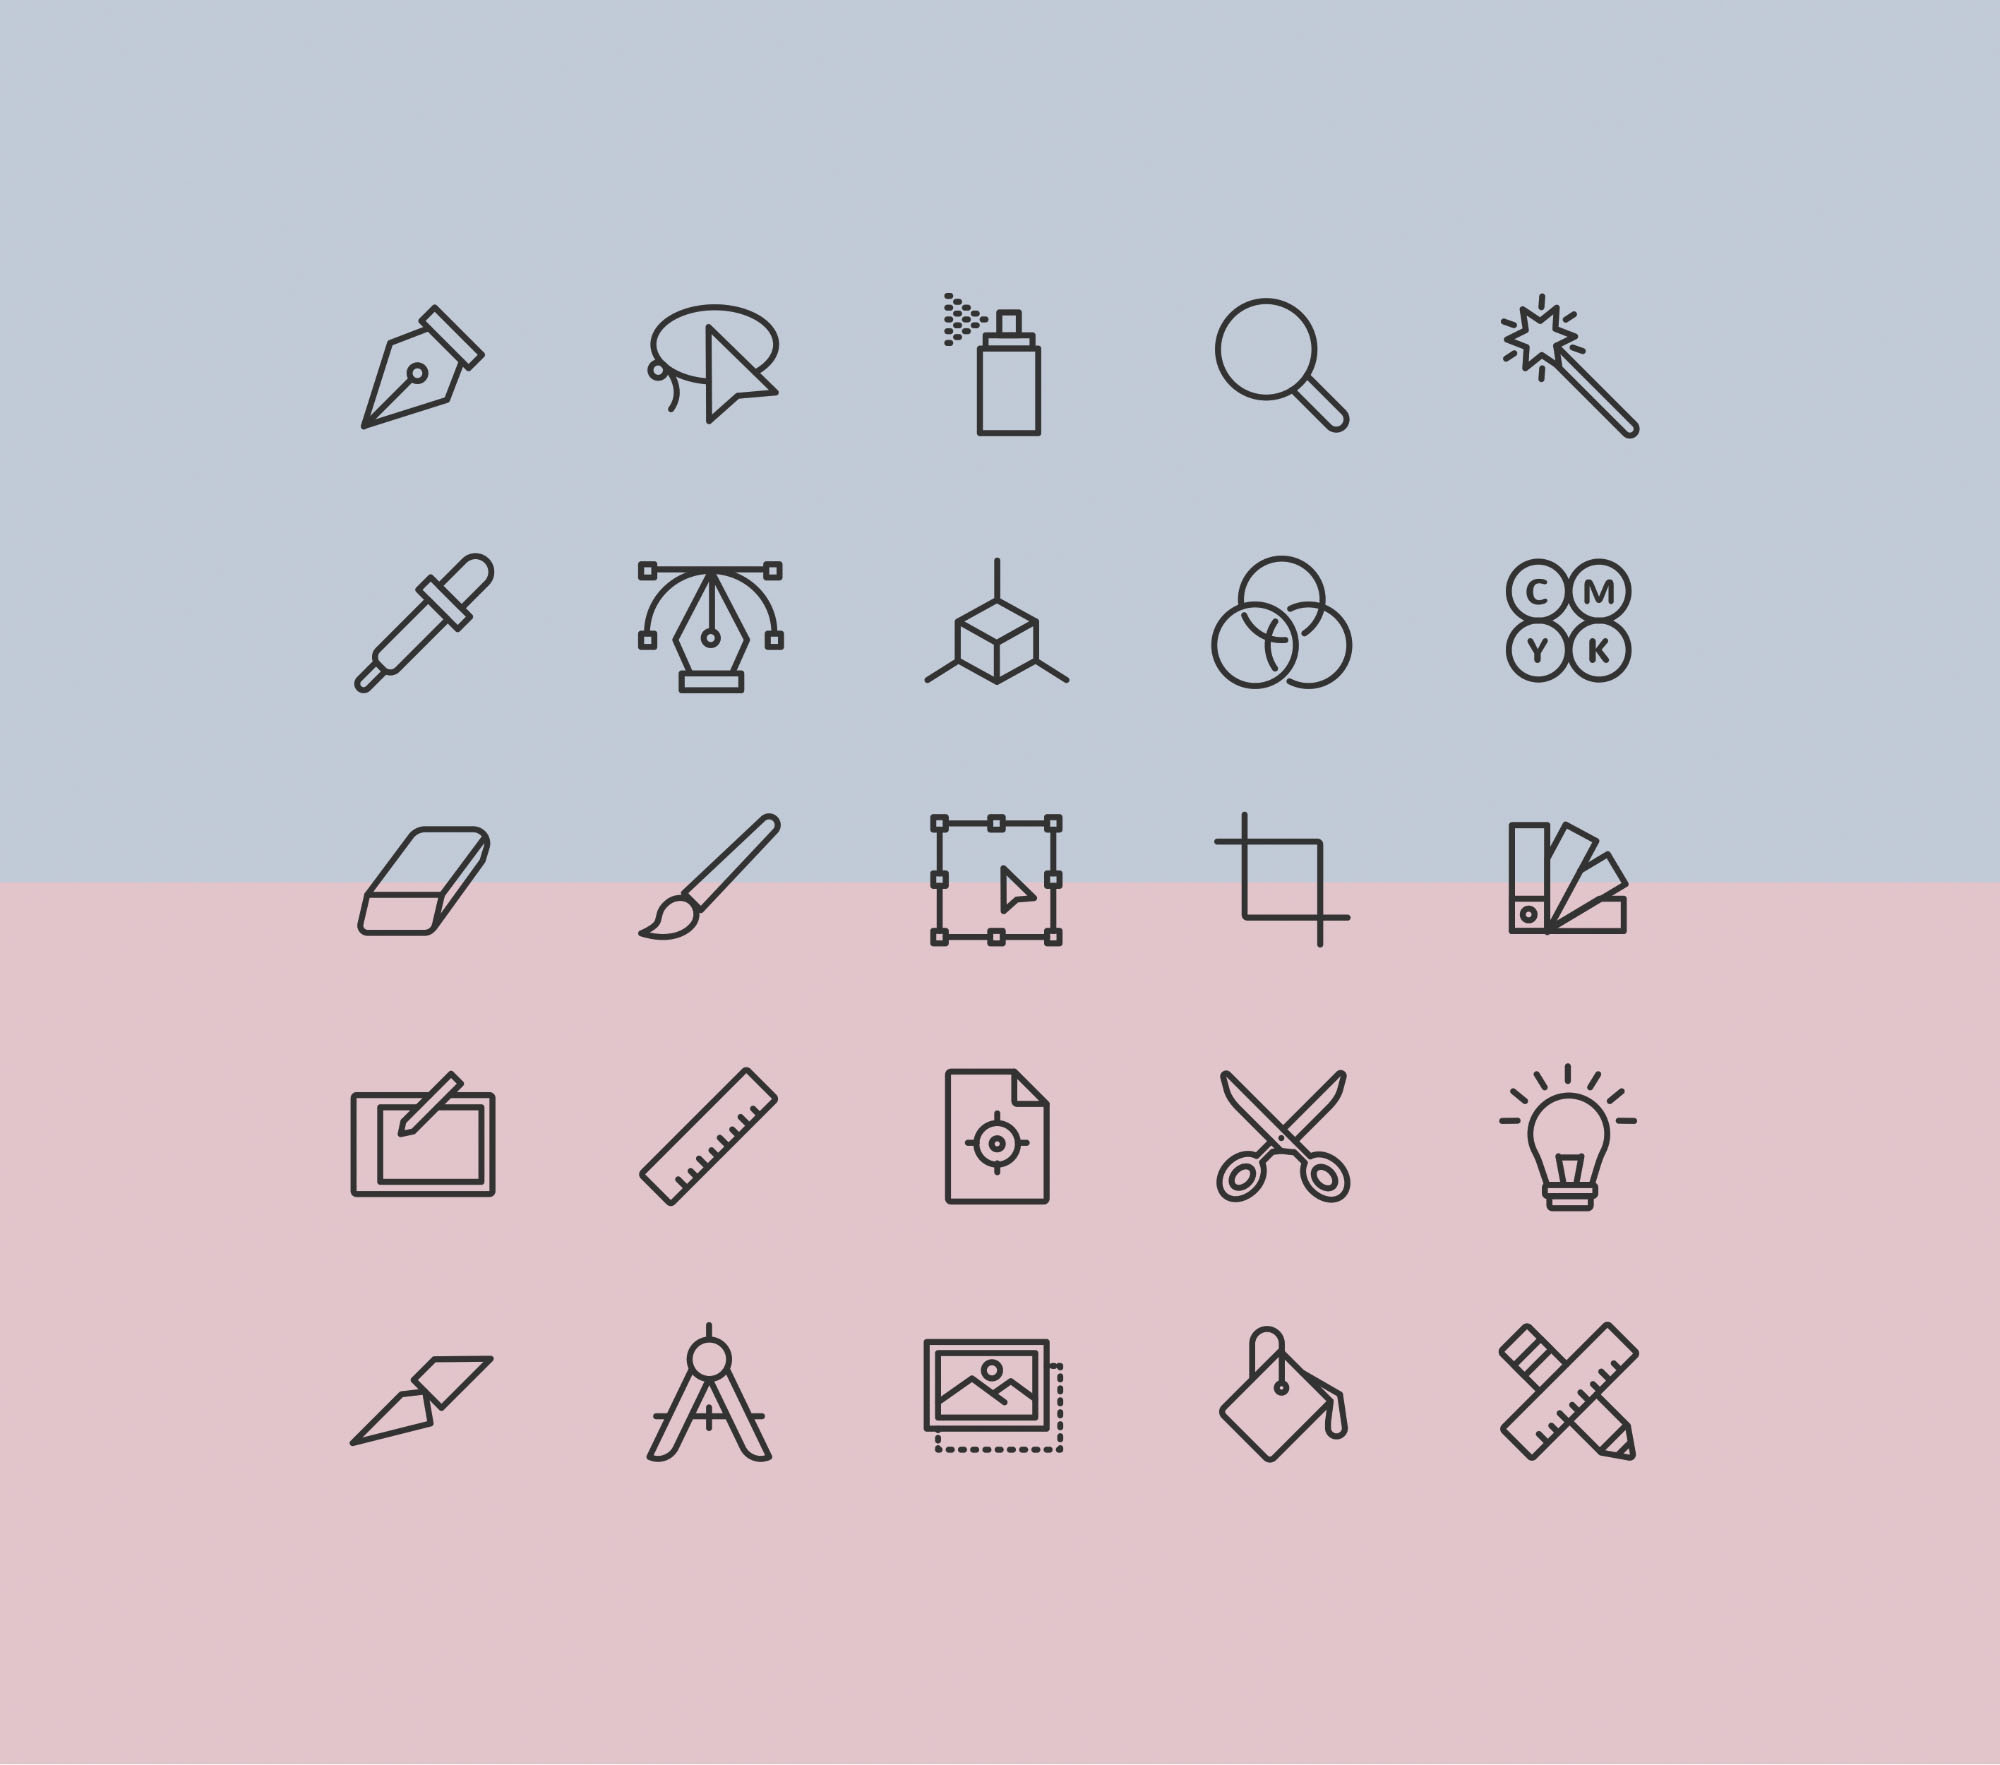 25枚简单图形设计矢量图标 25 Simple Graphic Design Icons插图